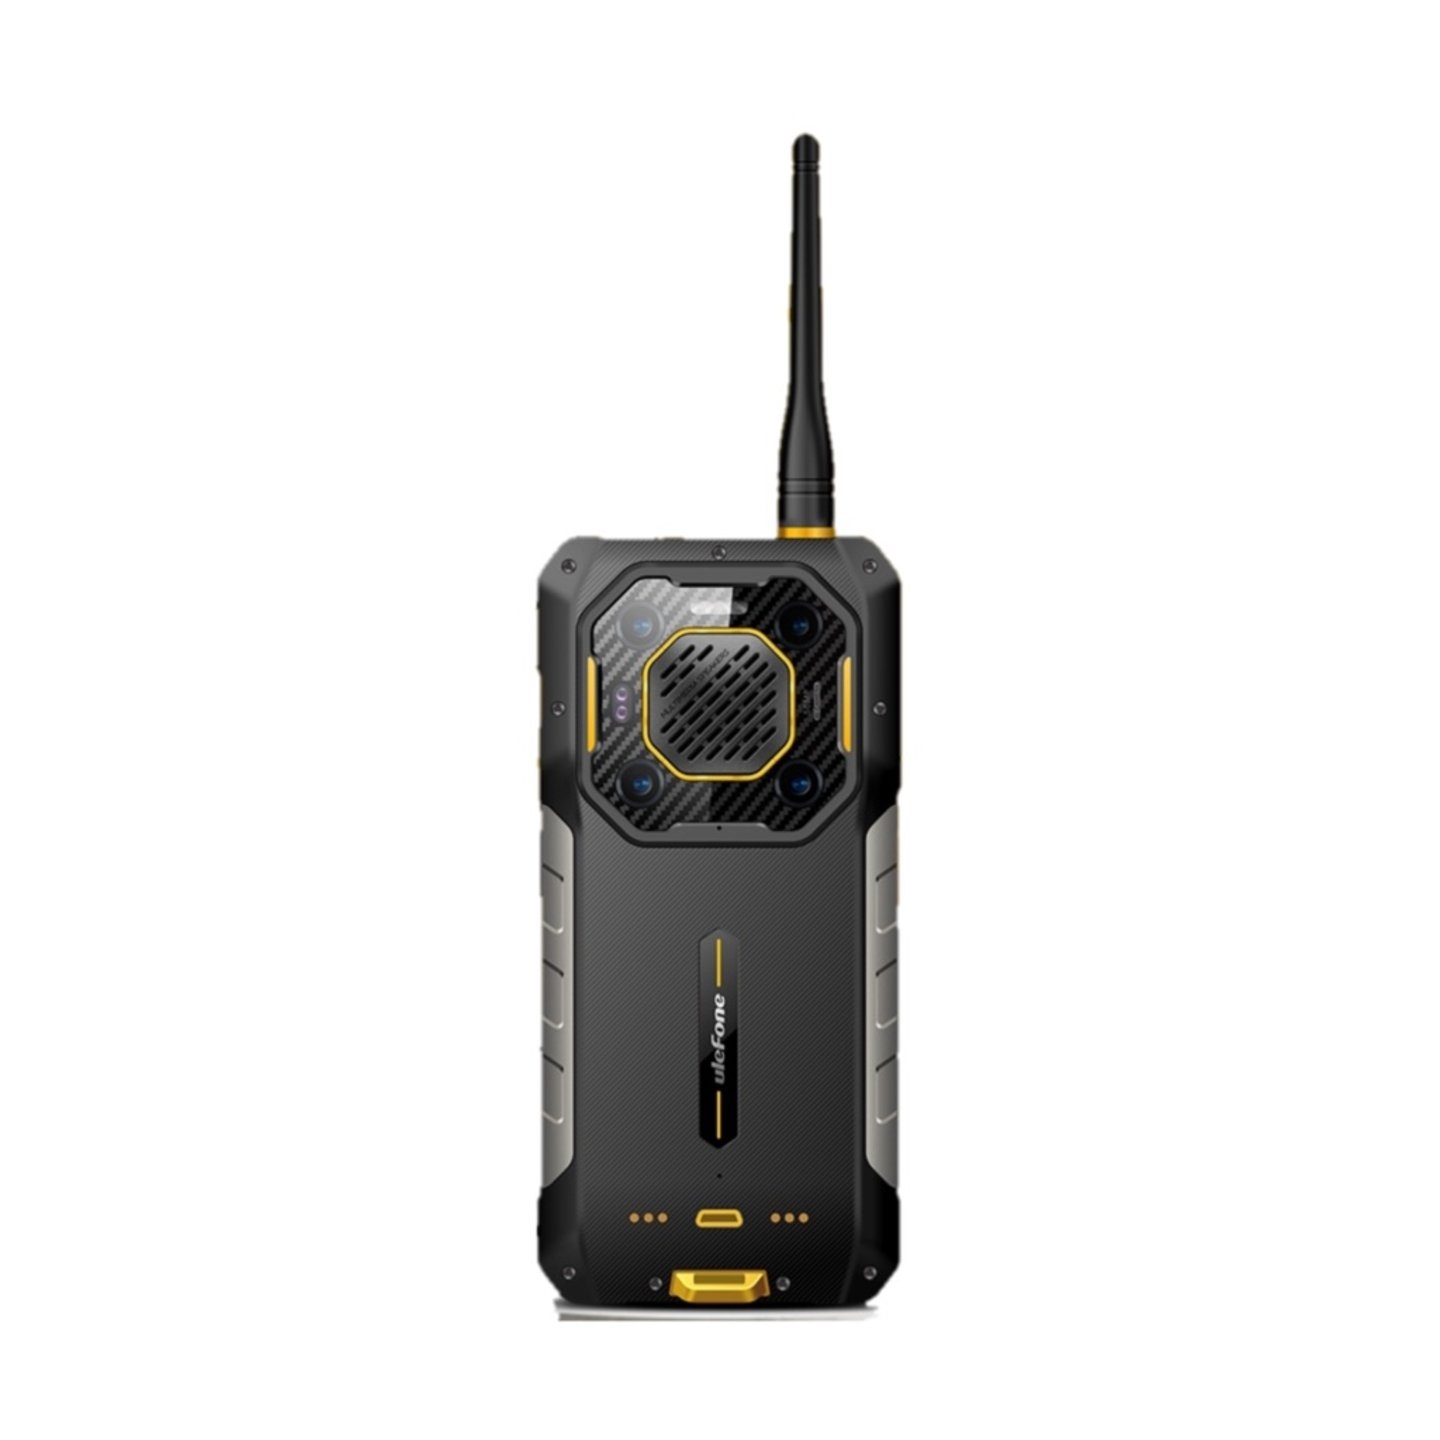 Ulefone walkie-talkie